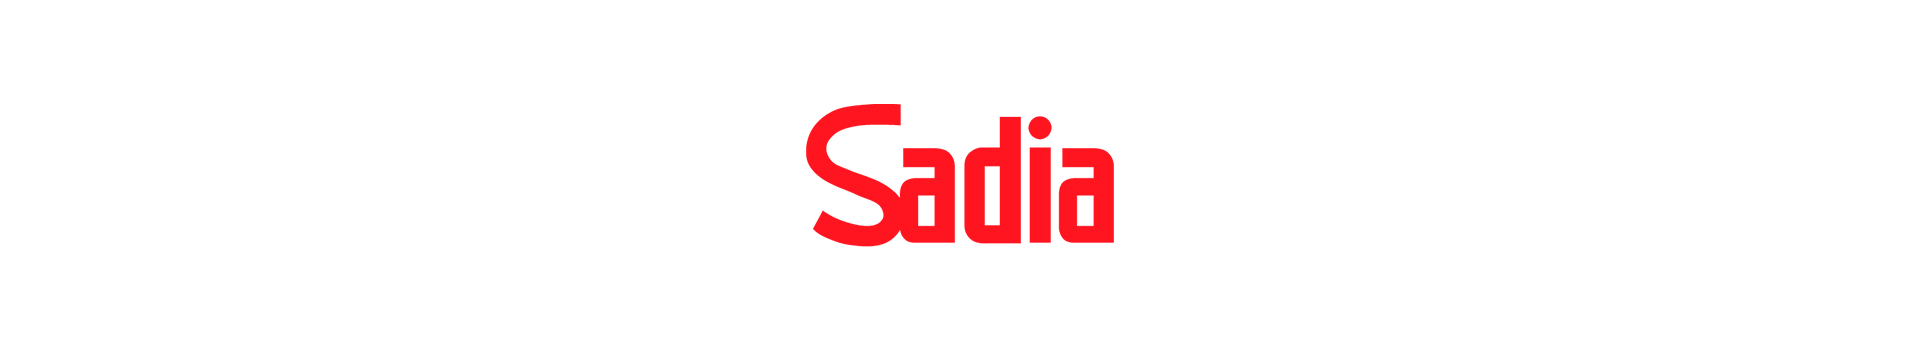 banner sadia